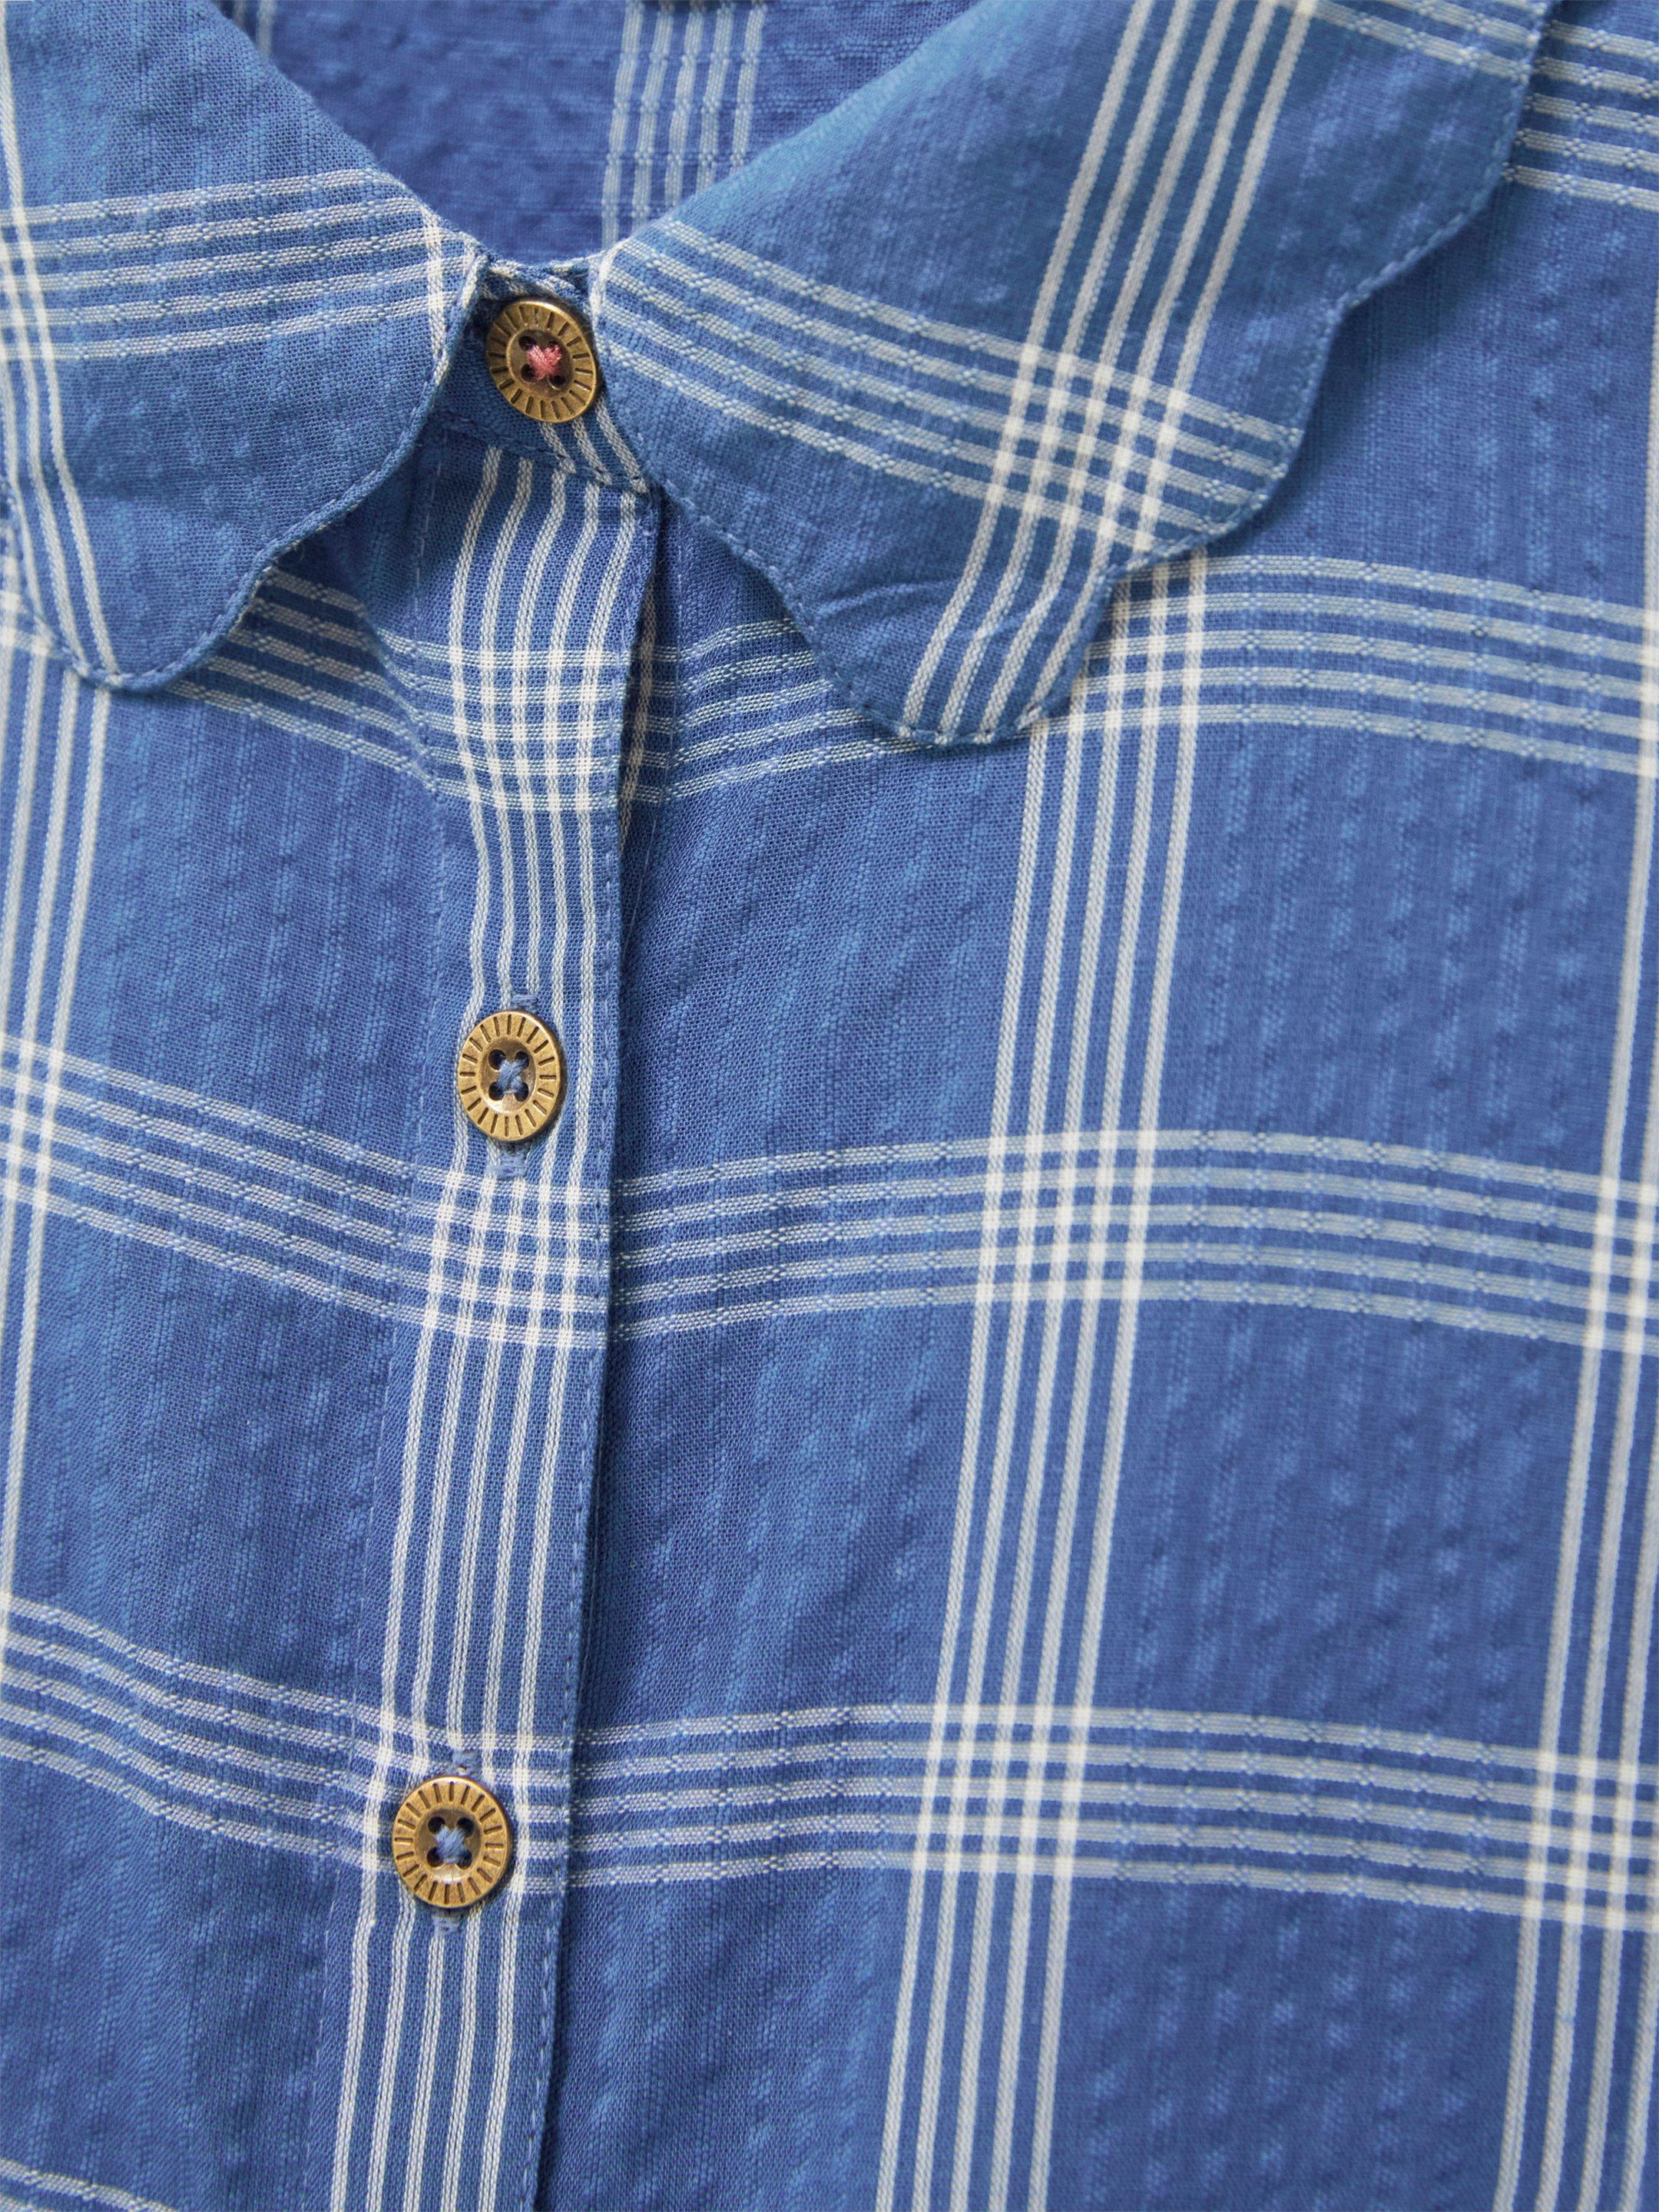 Lizzie Cotton Check Shirt in BLUE MLT - FLAT DETAIL